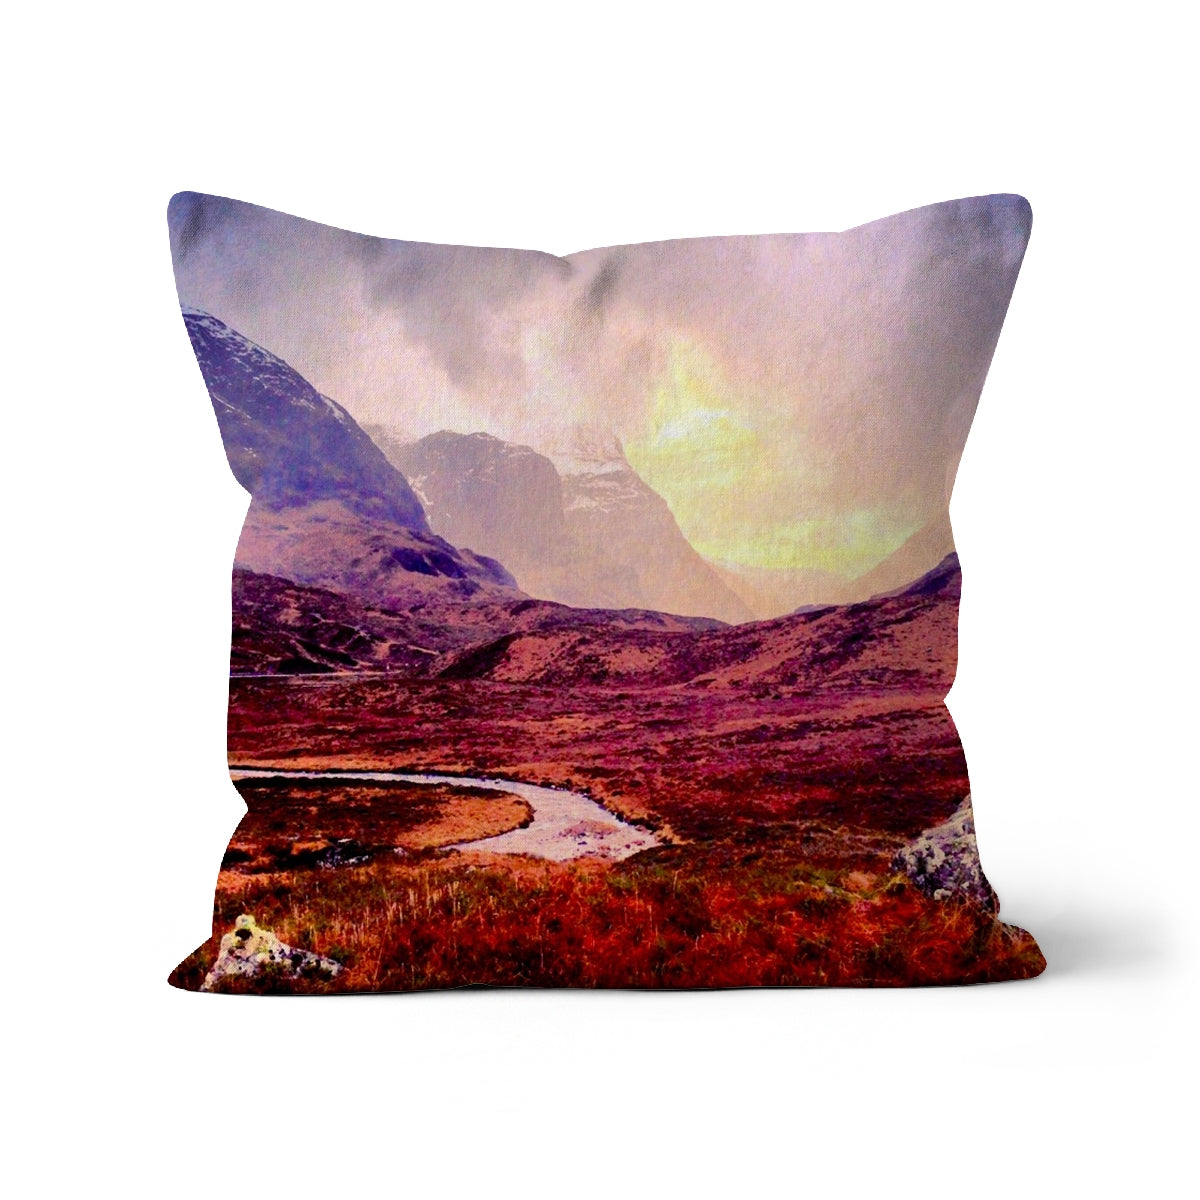 A Brooding Glencoe Art Gifts Cushion-Cushions-Glencoe Art Gallery-Linen-24"x24"-Paintings, Prints, Homeware, Art Gifts From Scotland By Scottish Artist Kevin Hunter